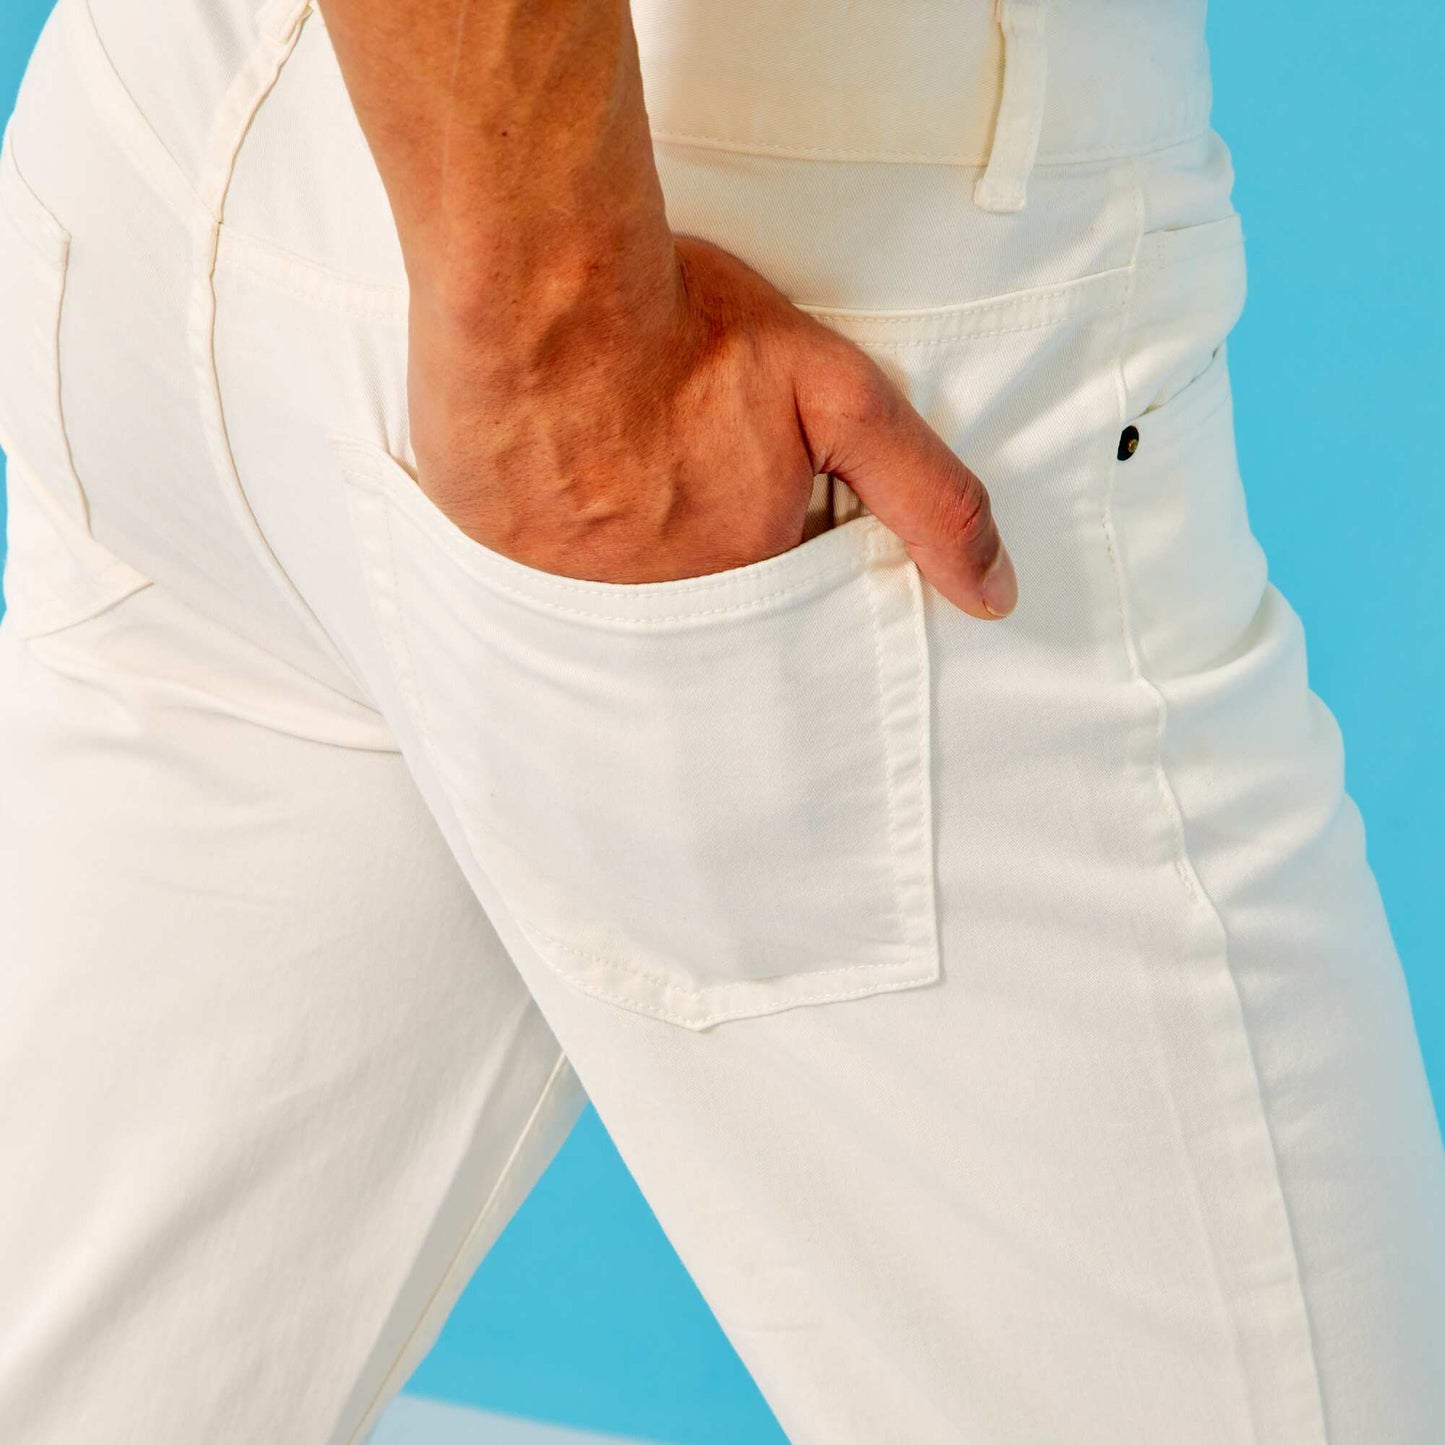 Pantalon slim 5 poches - L32 Blanc